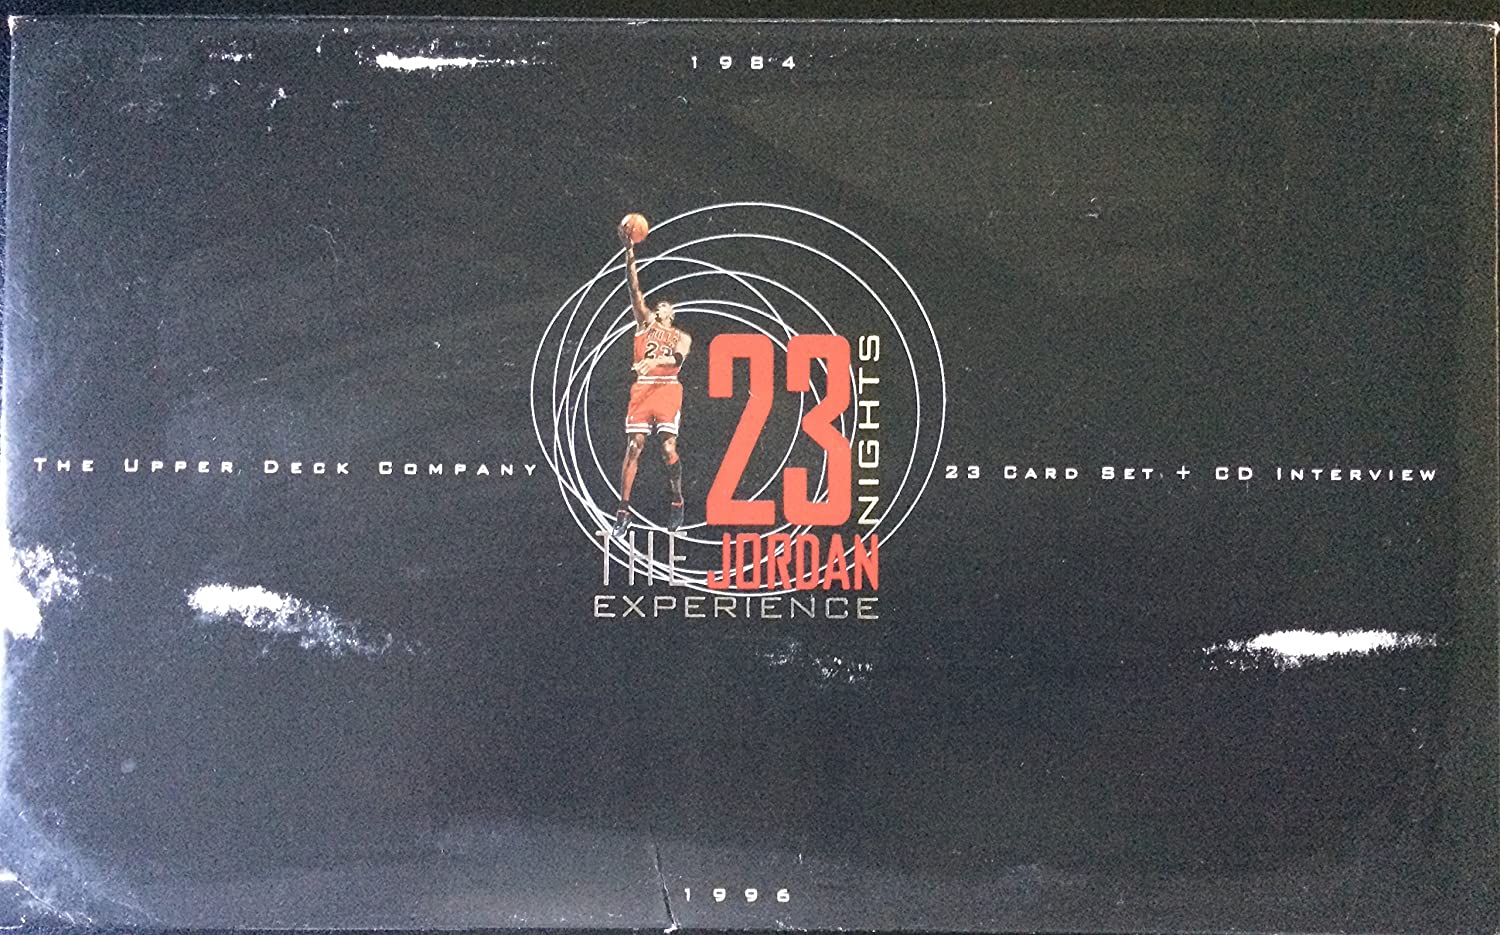 1996 - UPPER DECK The Jordan Experience 23 Nights - Box Set & CD Interview